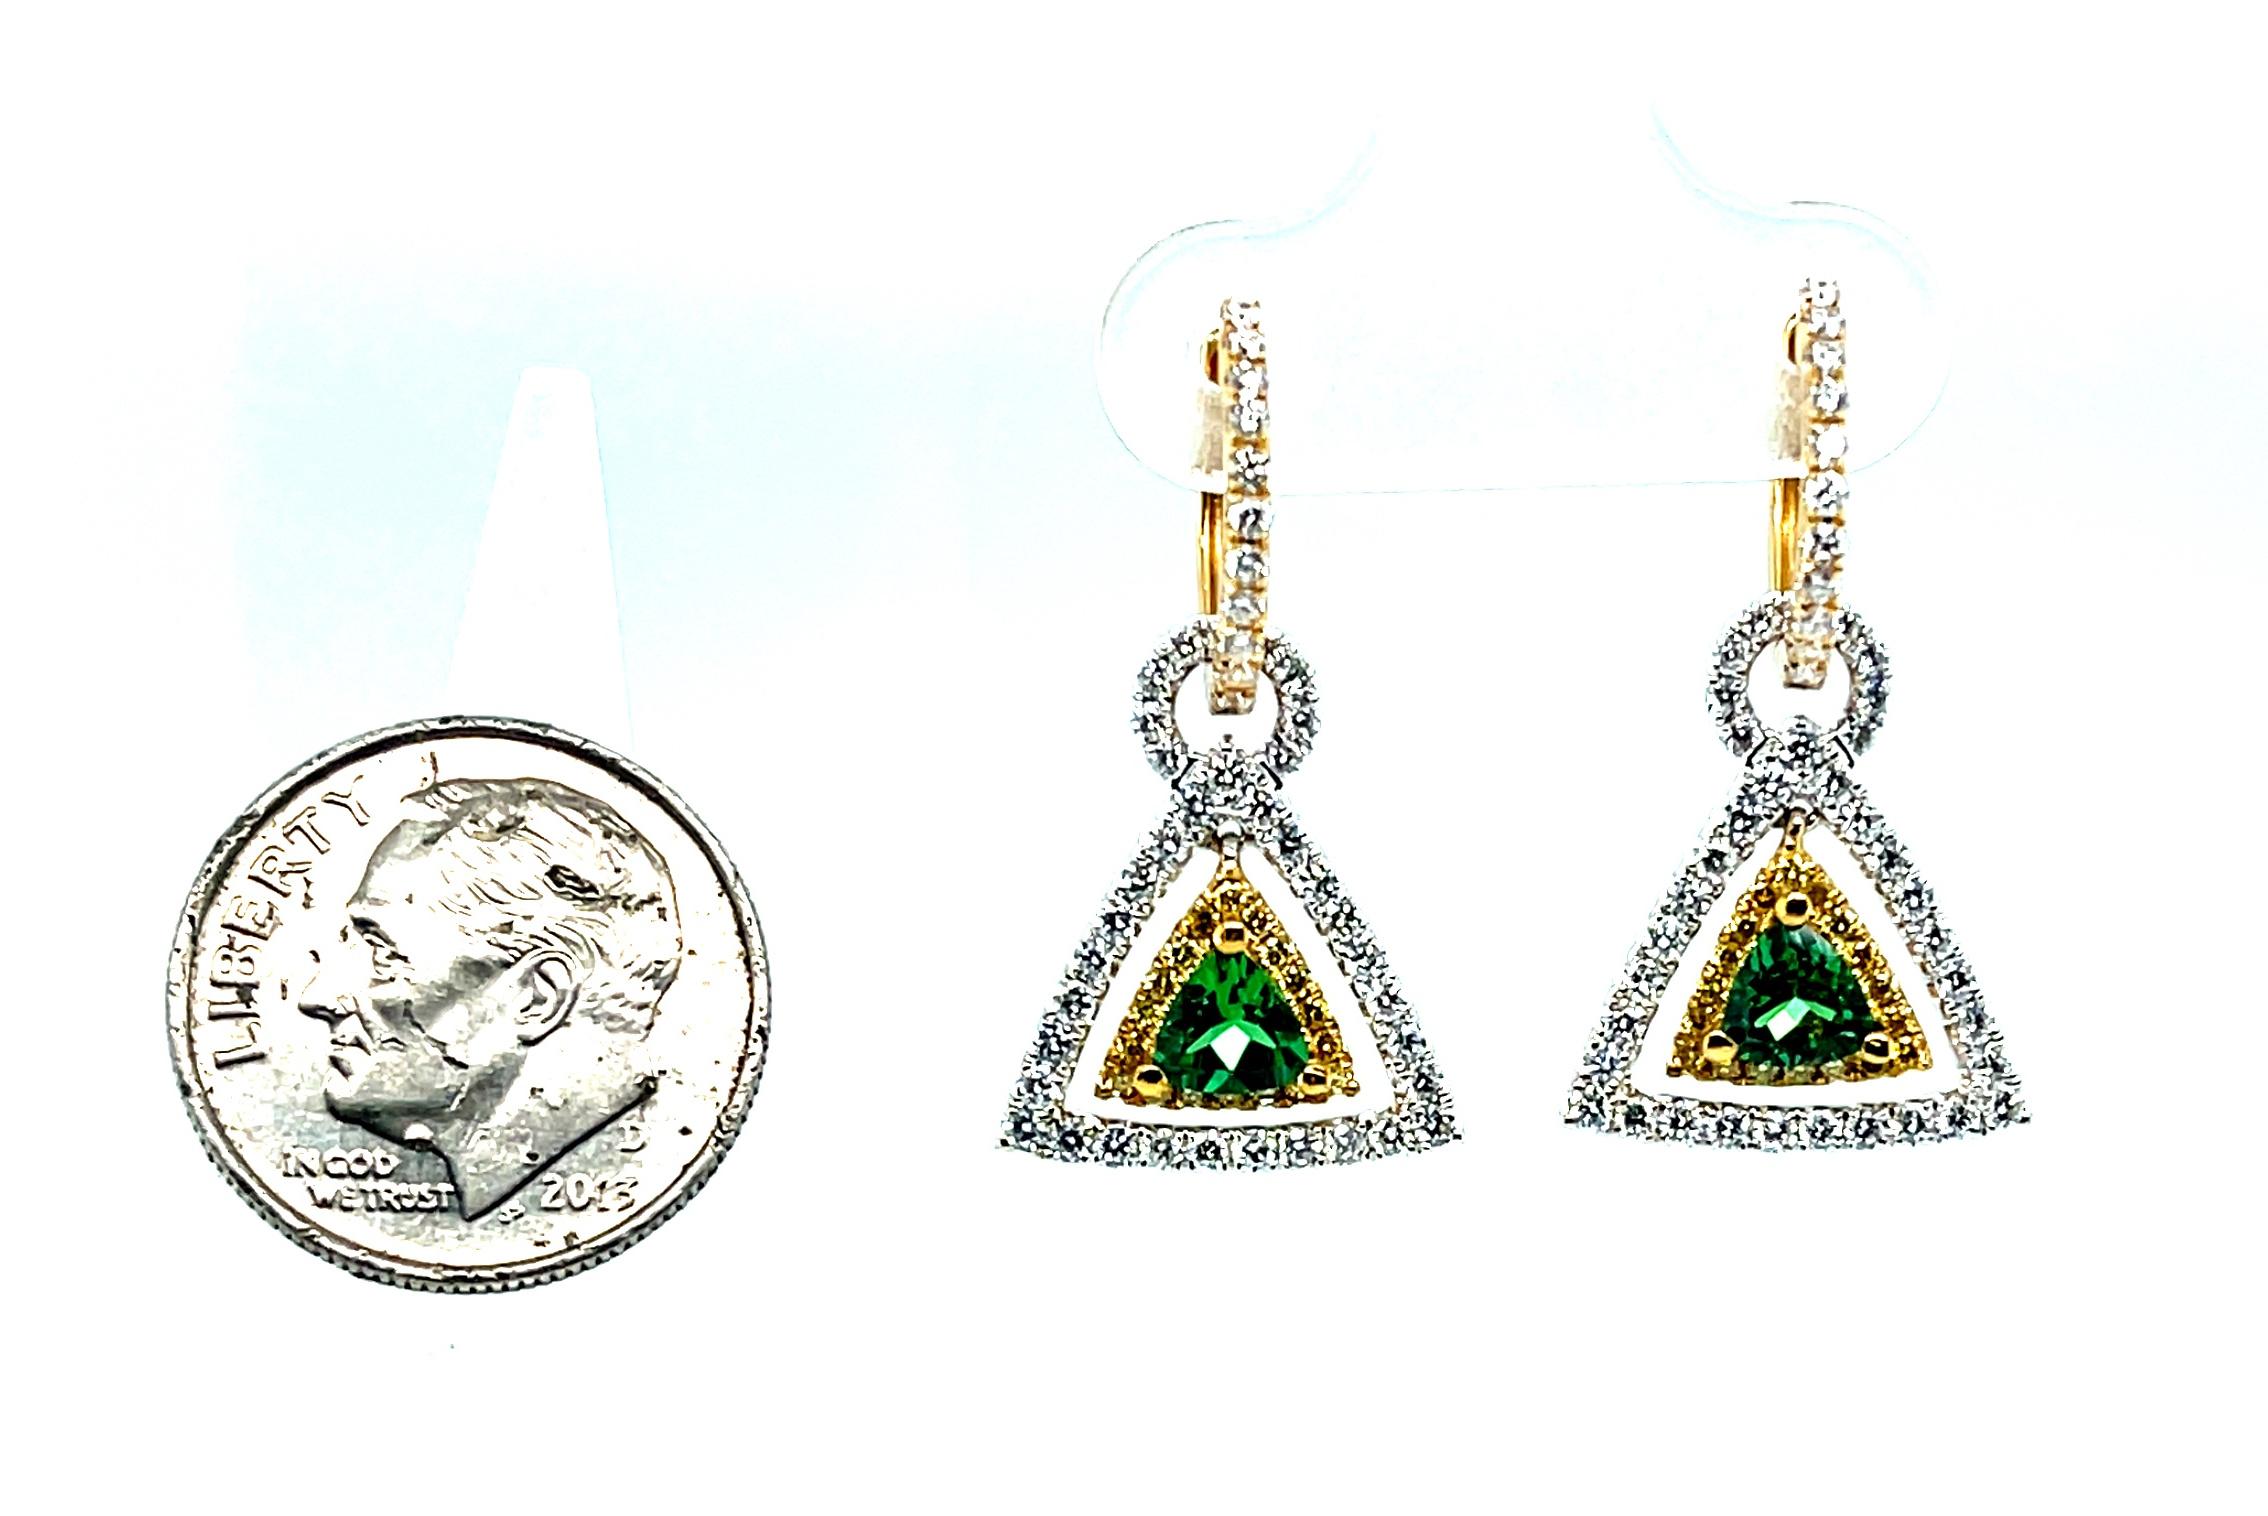 Tsavorite Garnet, Diamond, and Yellow Sapphire Dangle Earrings in 18k Gold   For Sale 3